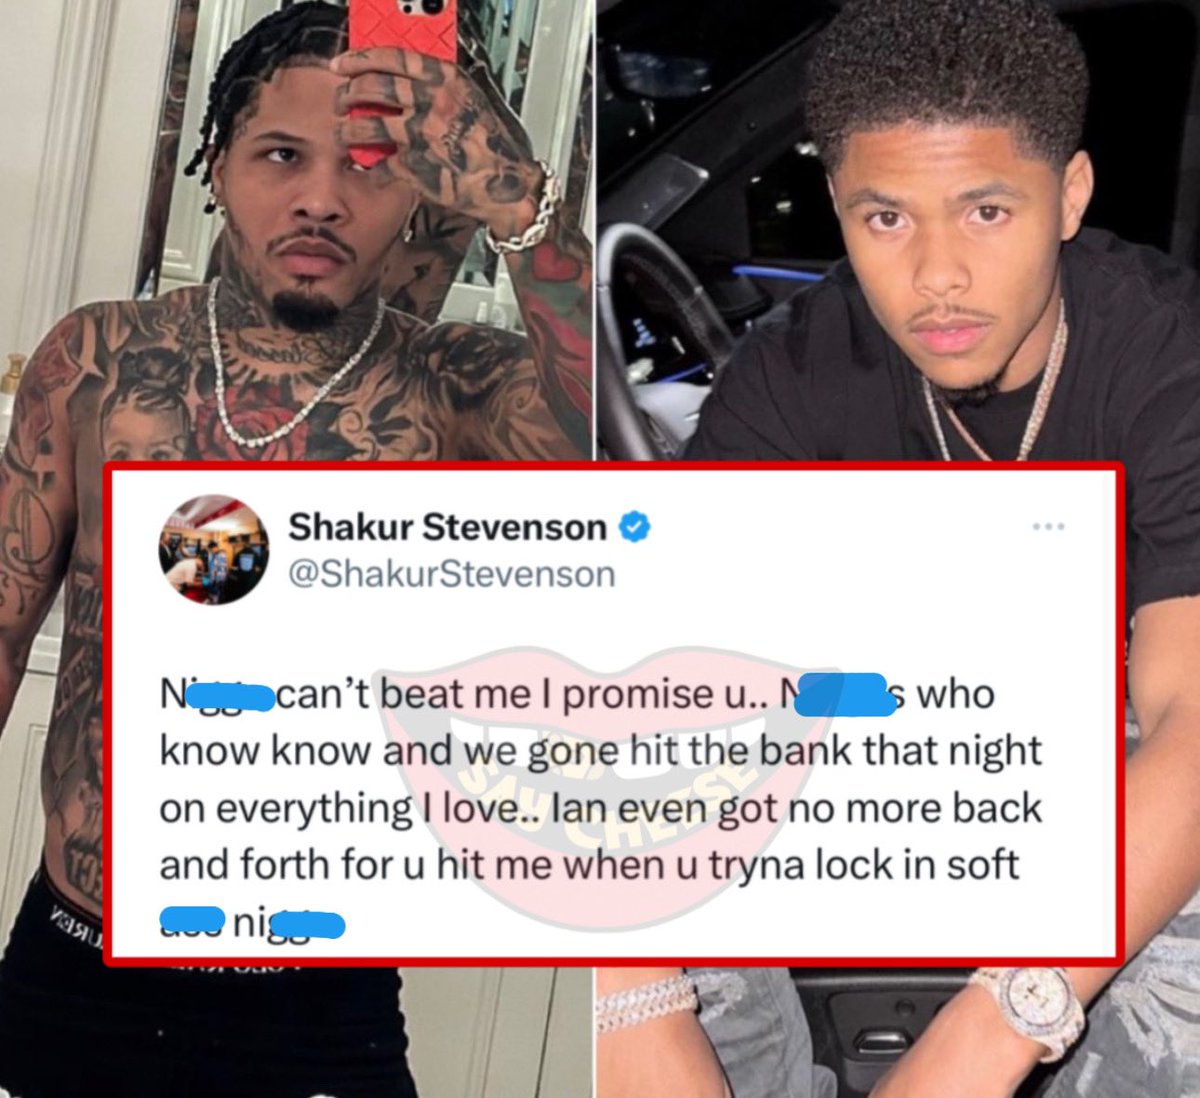 Shakur Stevenson says Gervonta Davis cannot beat him: “N**** can’t beat me I promise you”